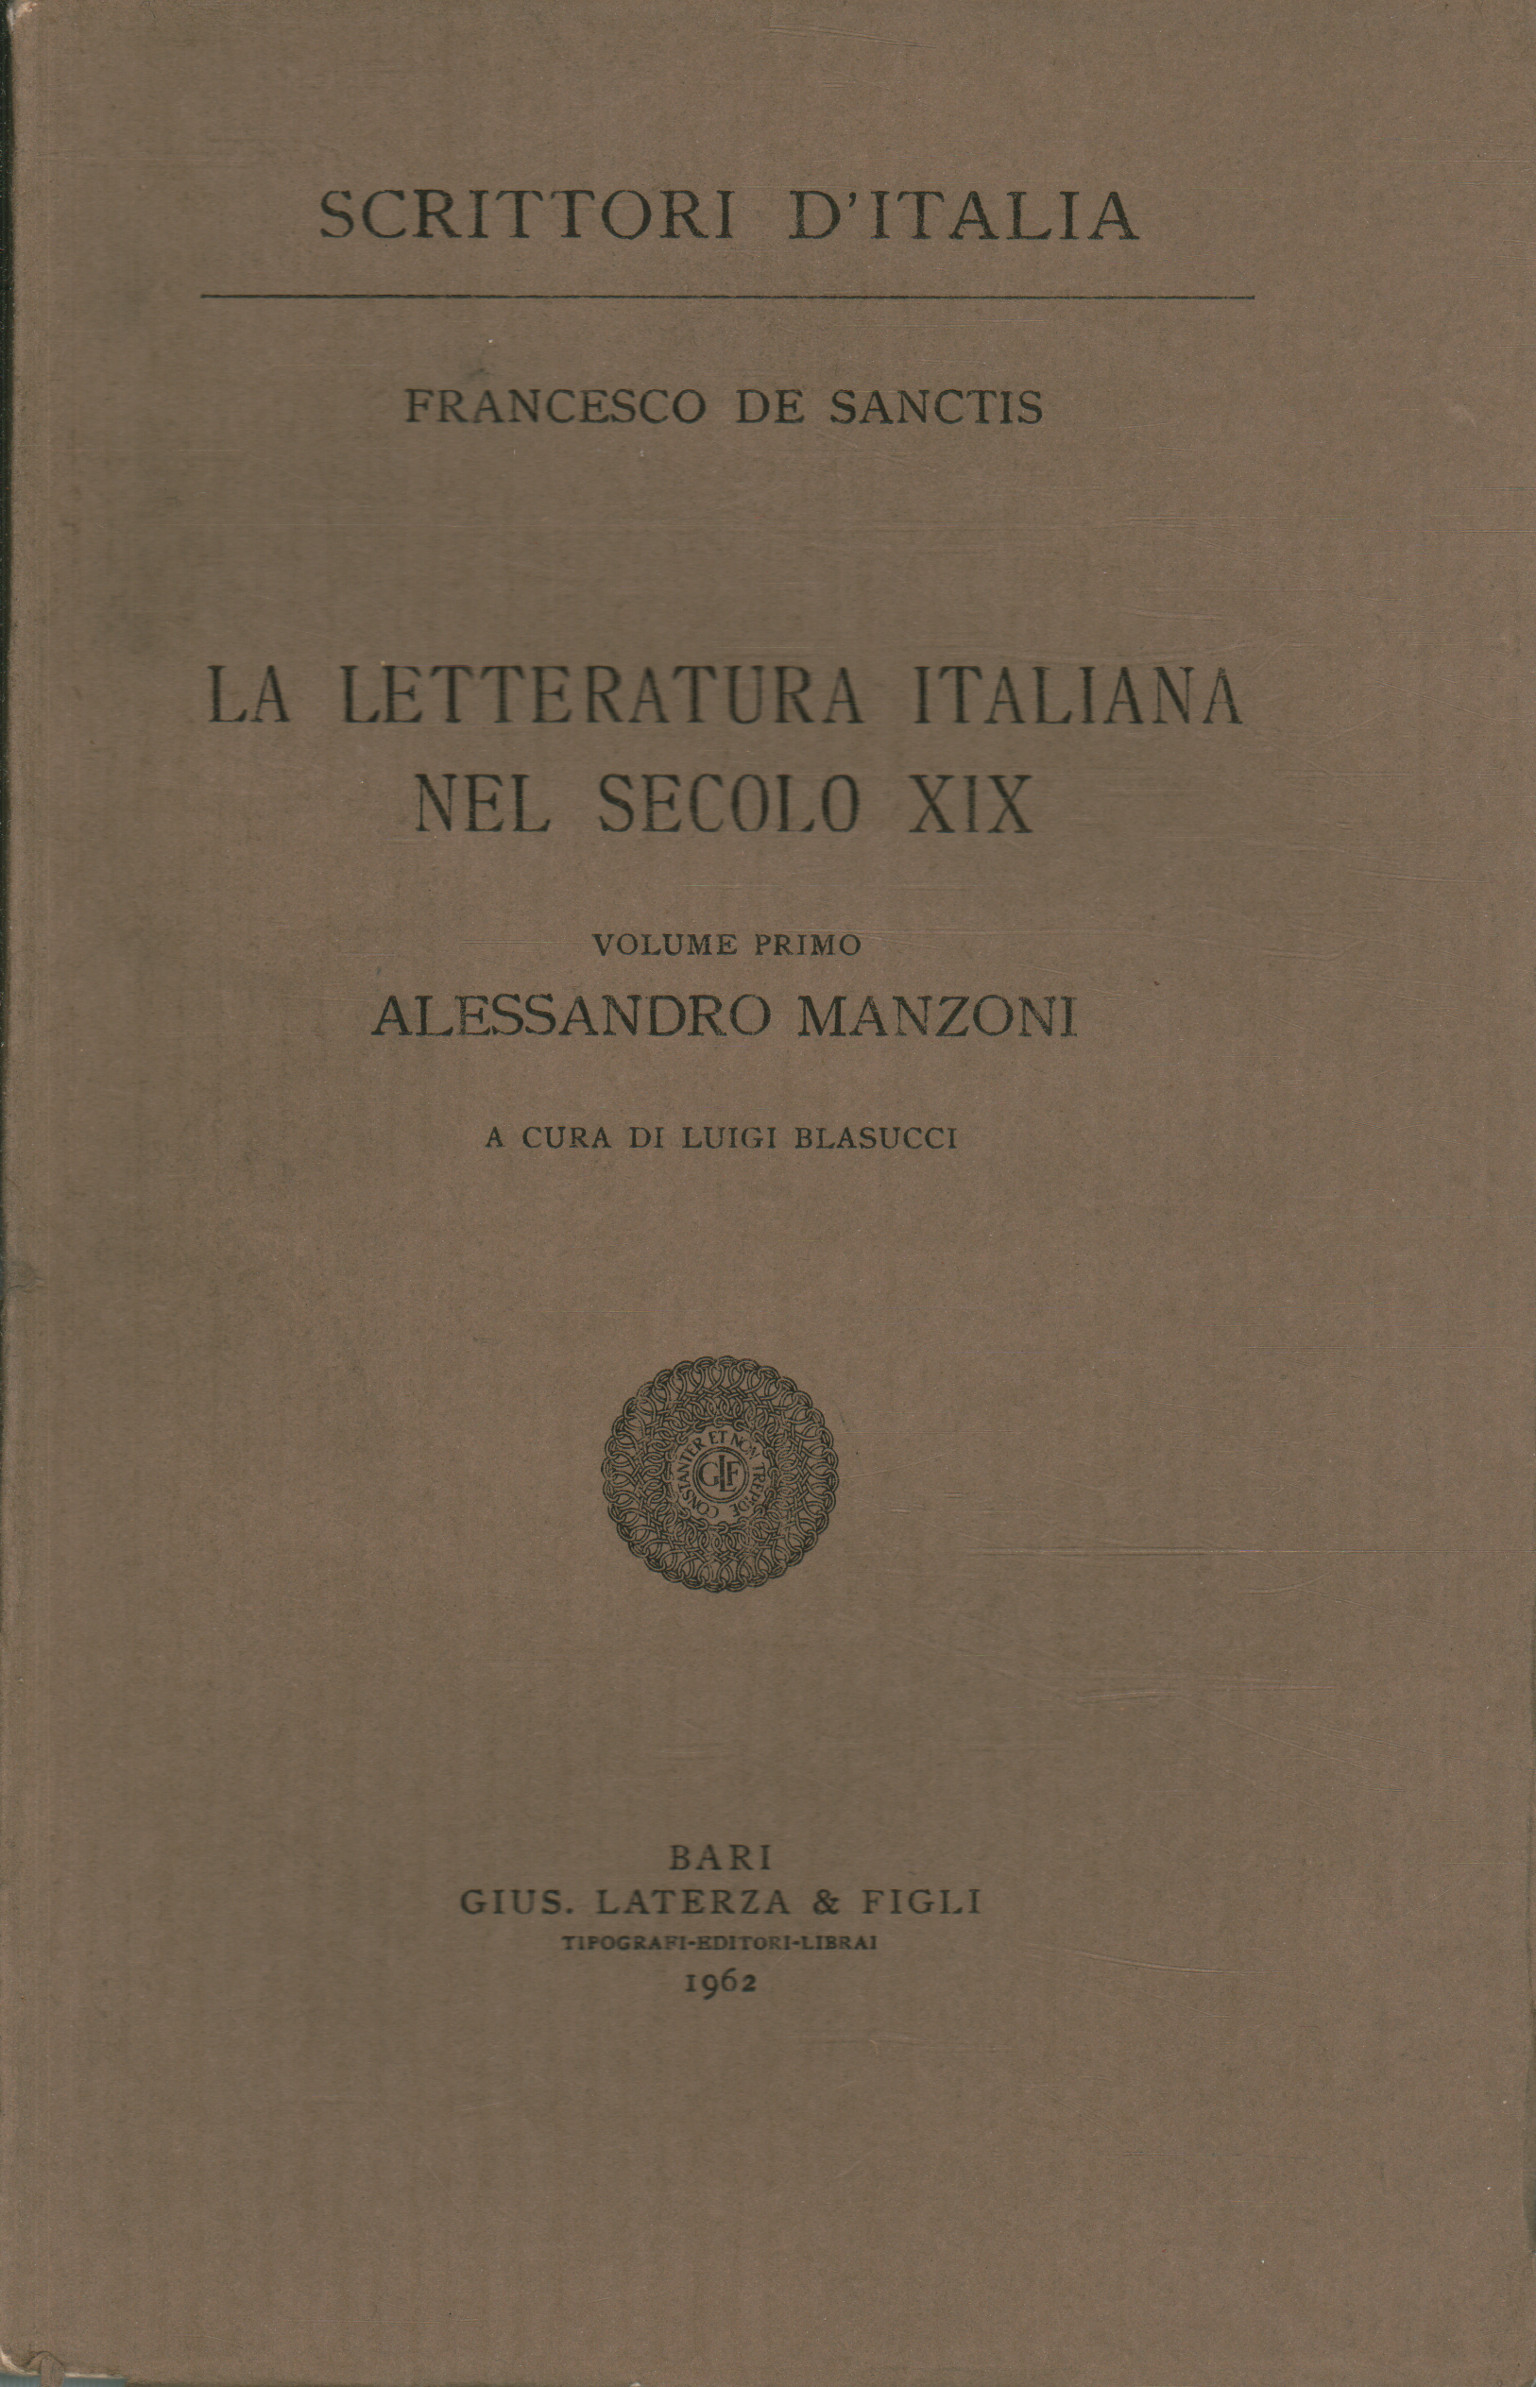 La letteratura italiana nel secolo xix. Volume pri, Francesco De Sanctis